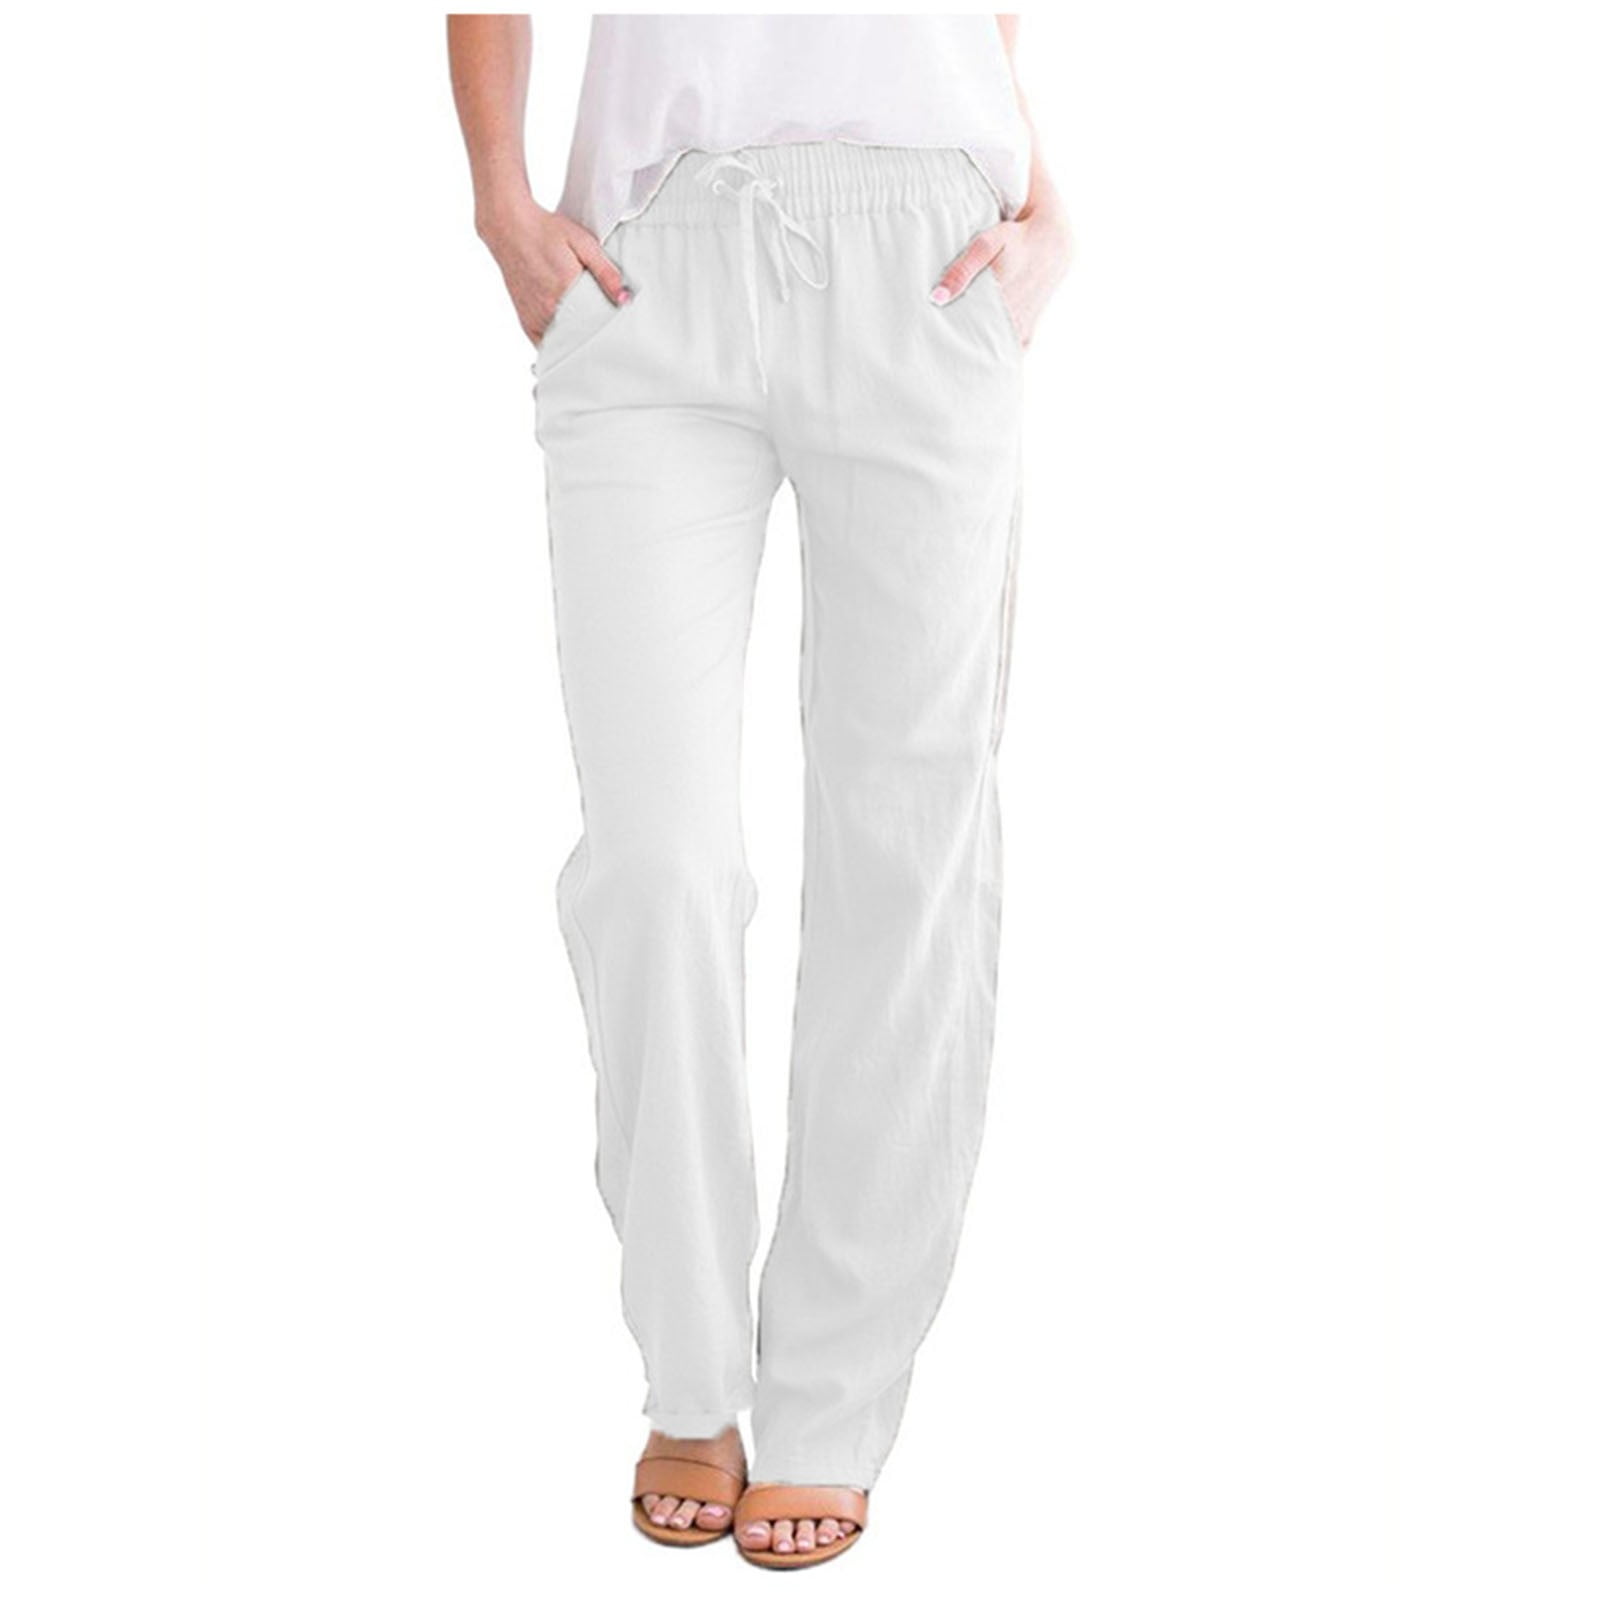 BHSJ Casual Pants for Women Cotton and Linen Solid Drawstring Elastic Waist Long Straight Pants Wide Leg Lounge Pants